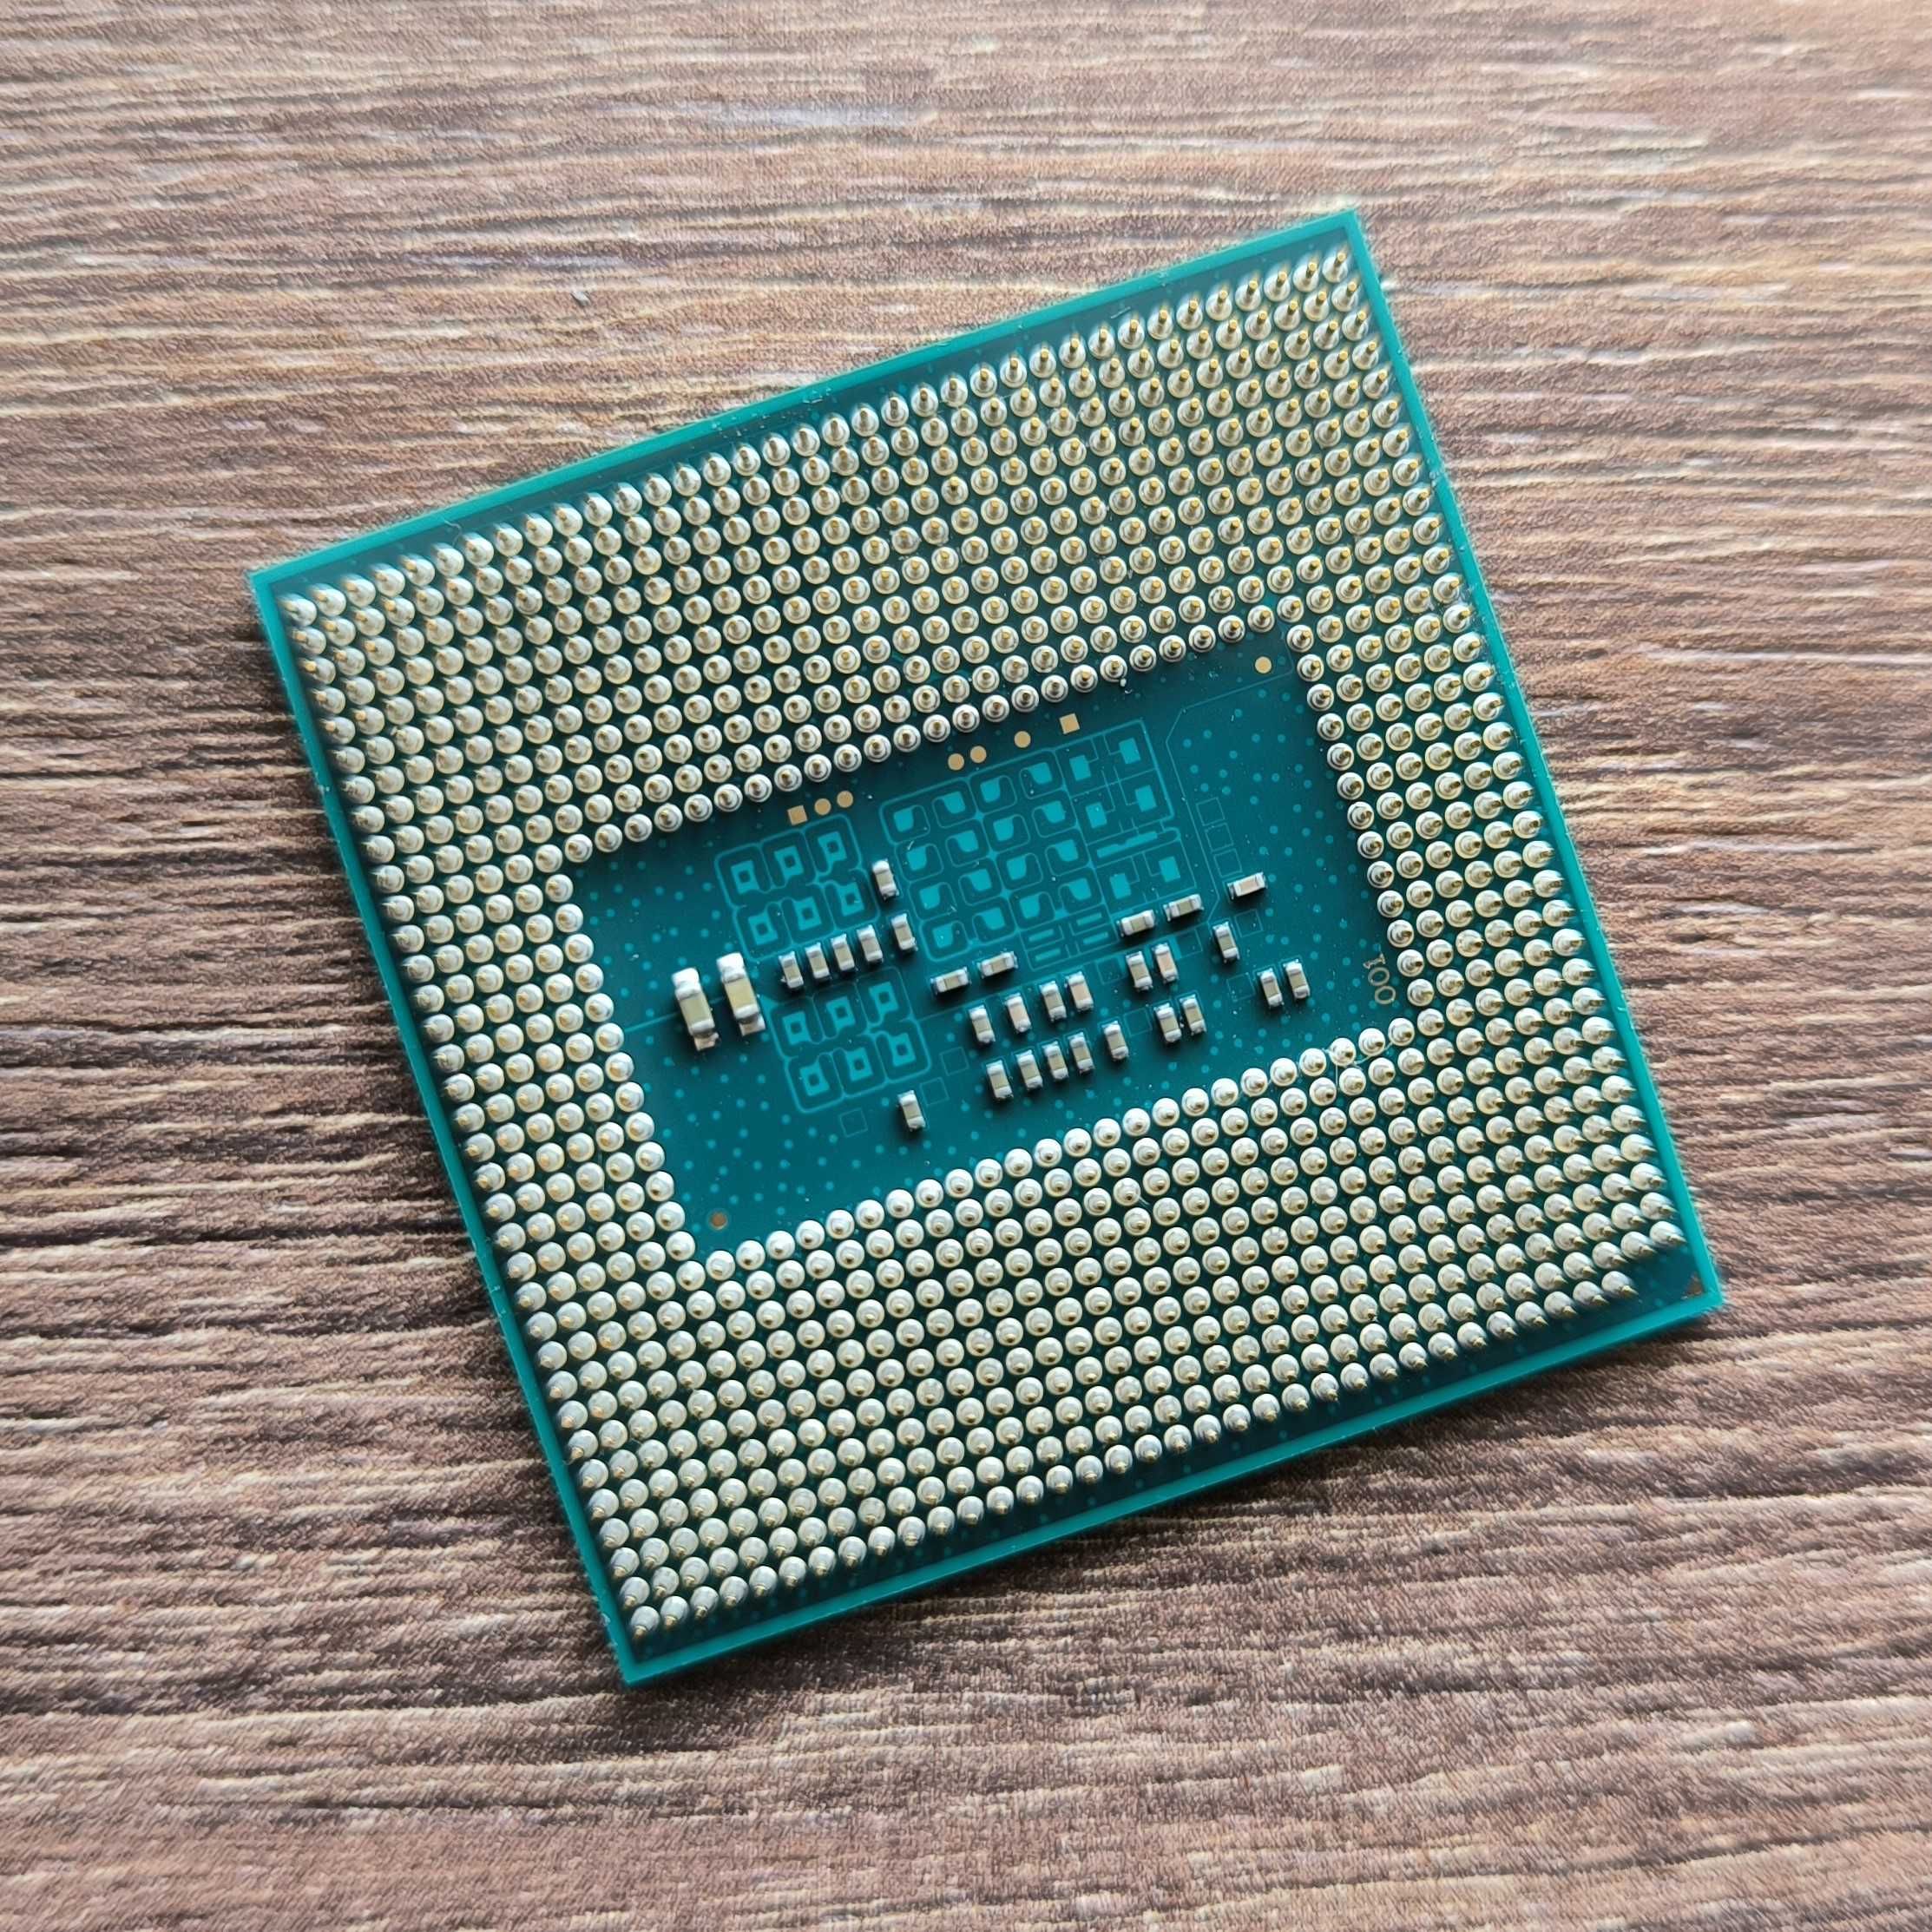 Процессор Intel Core i5-4310M (rPGA946B)